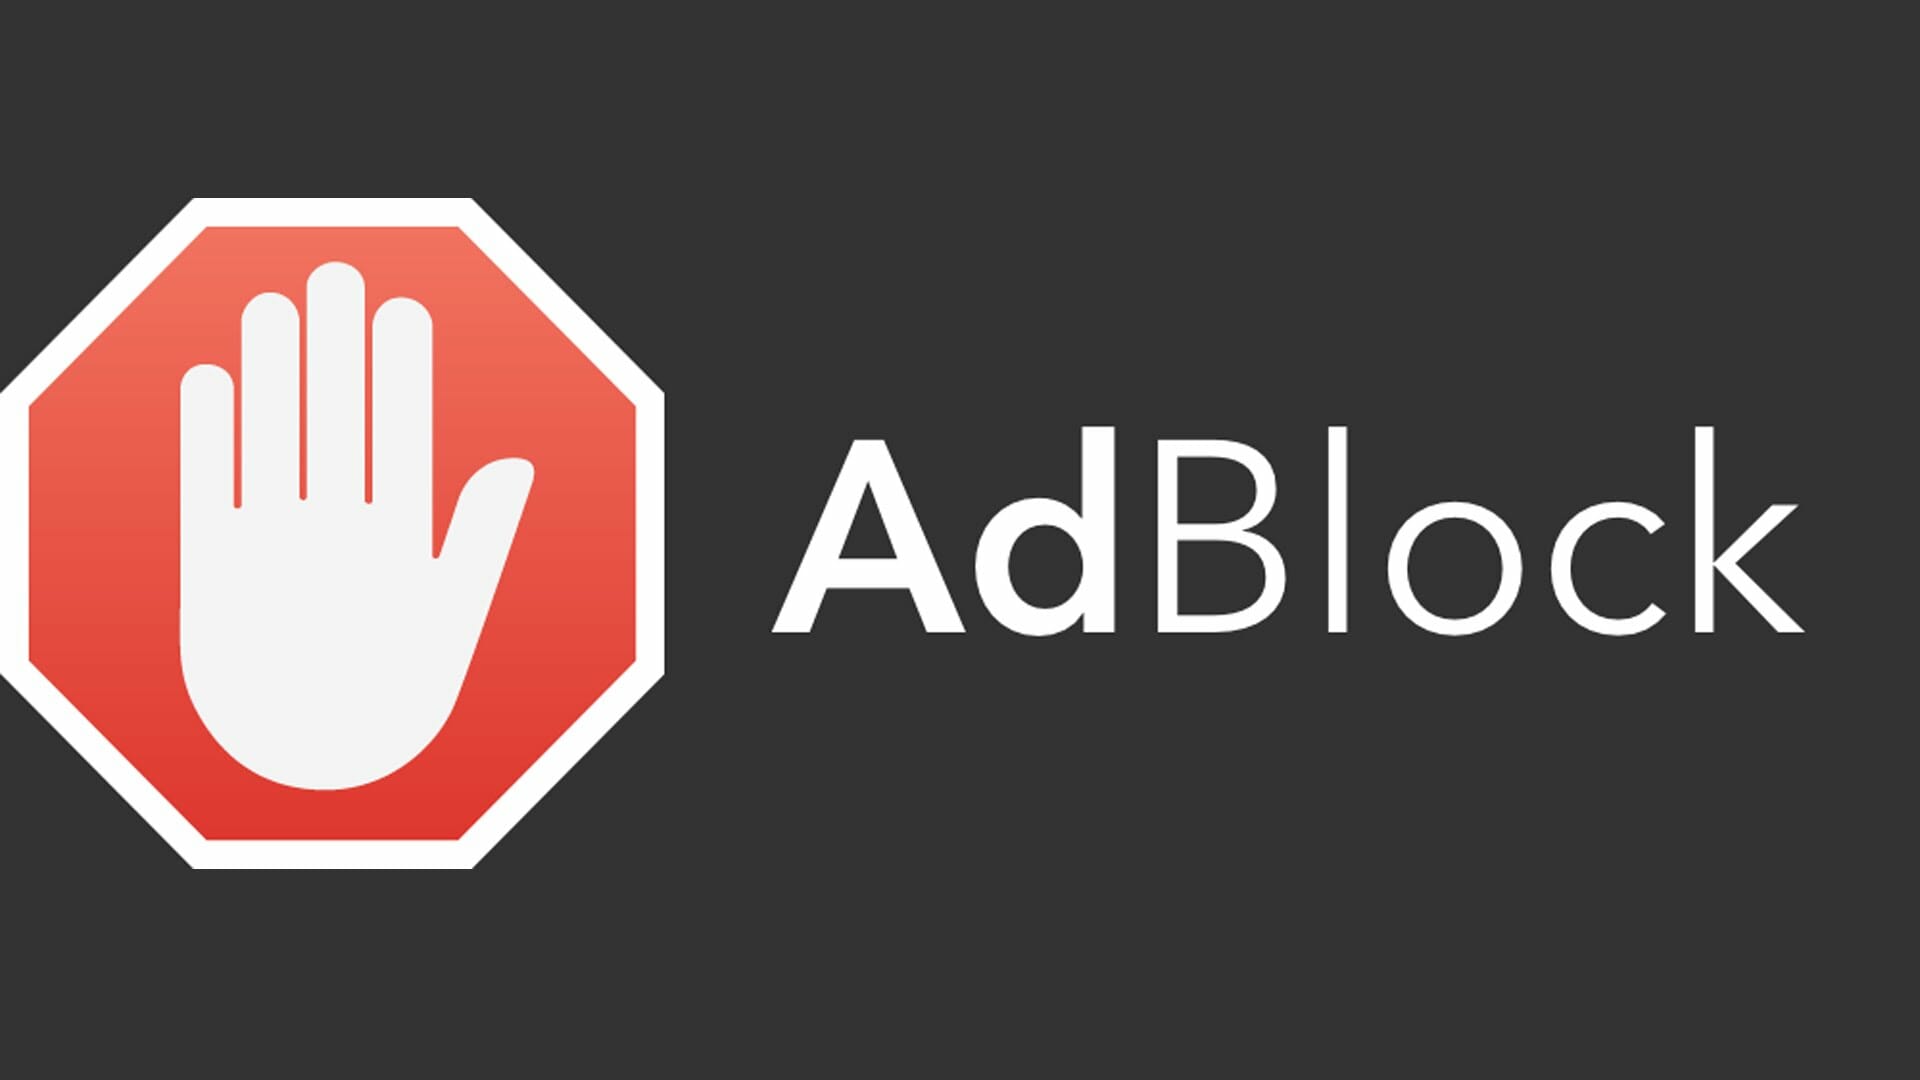 adblock chrome windows 10 free download